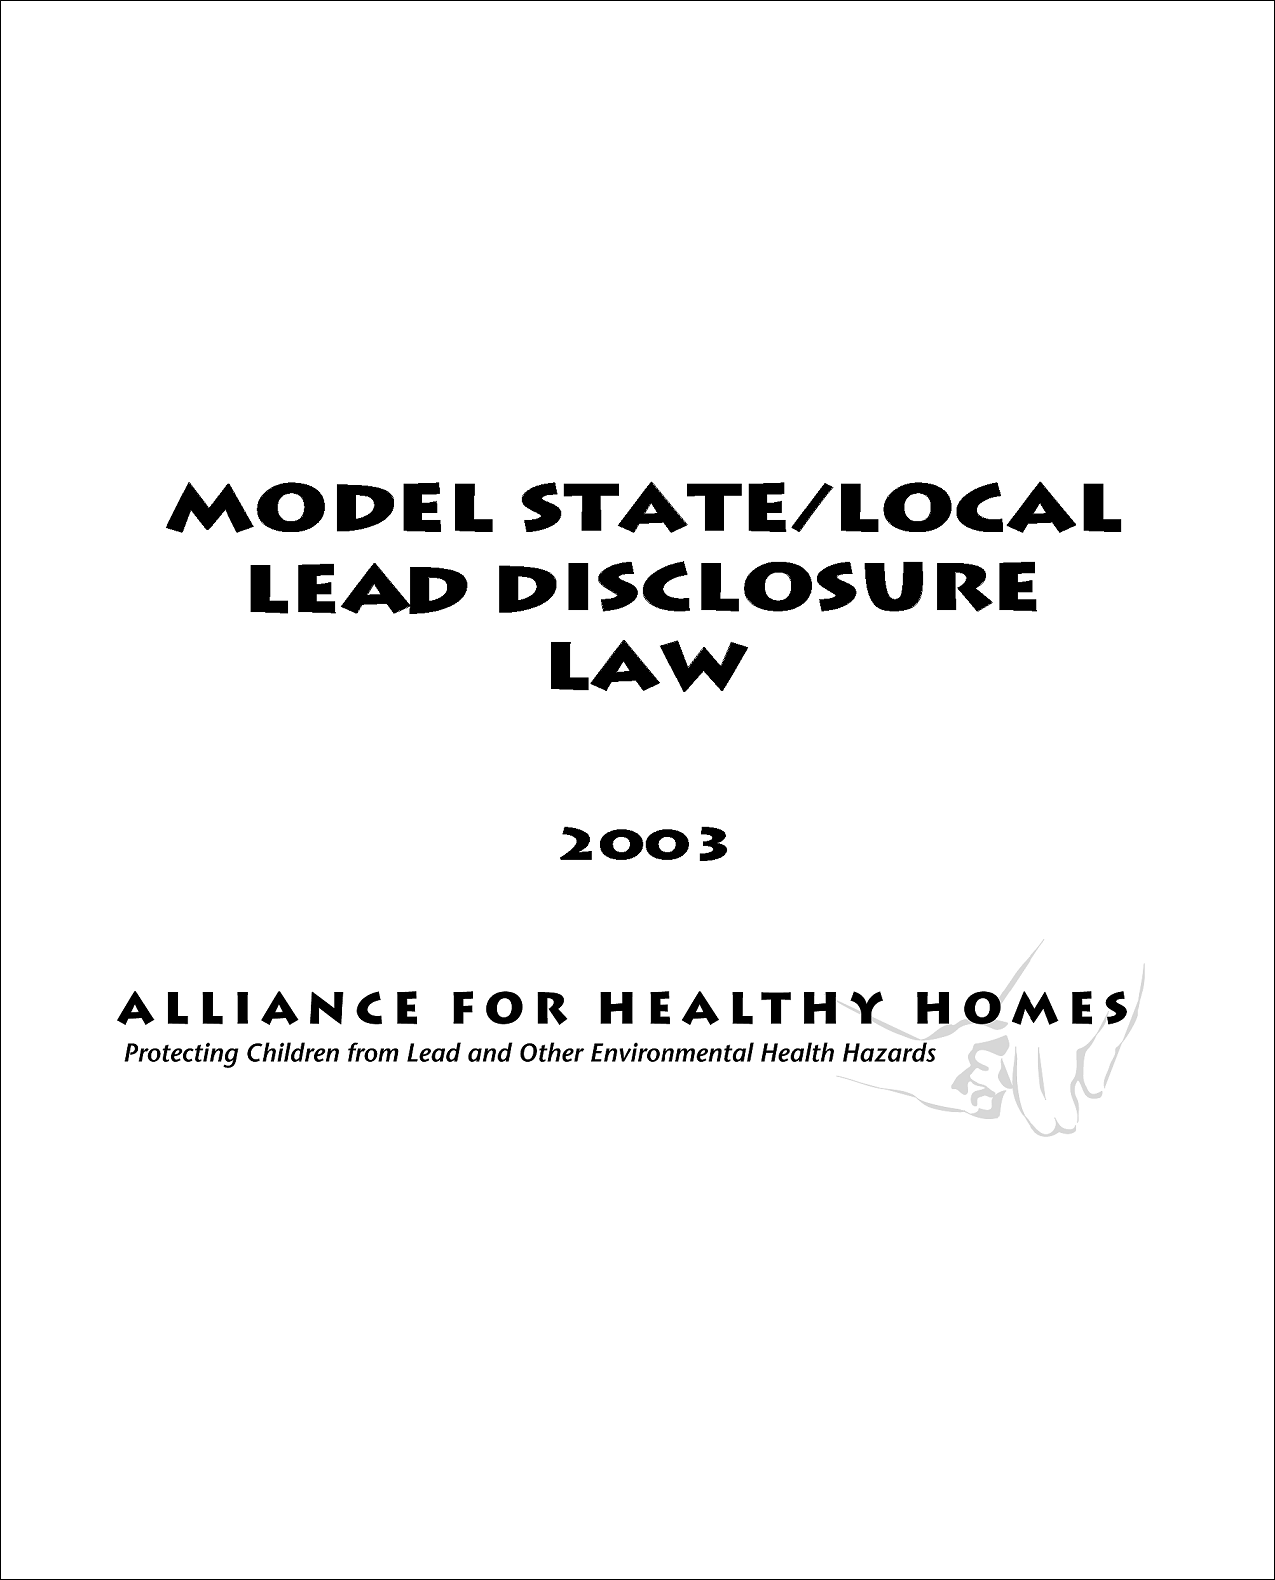 Model State/Local Lead Disclosure Law